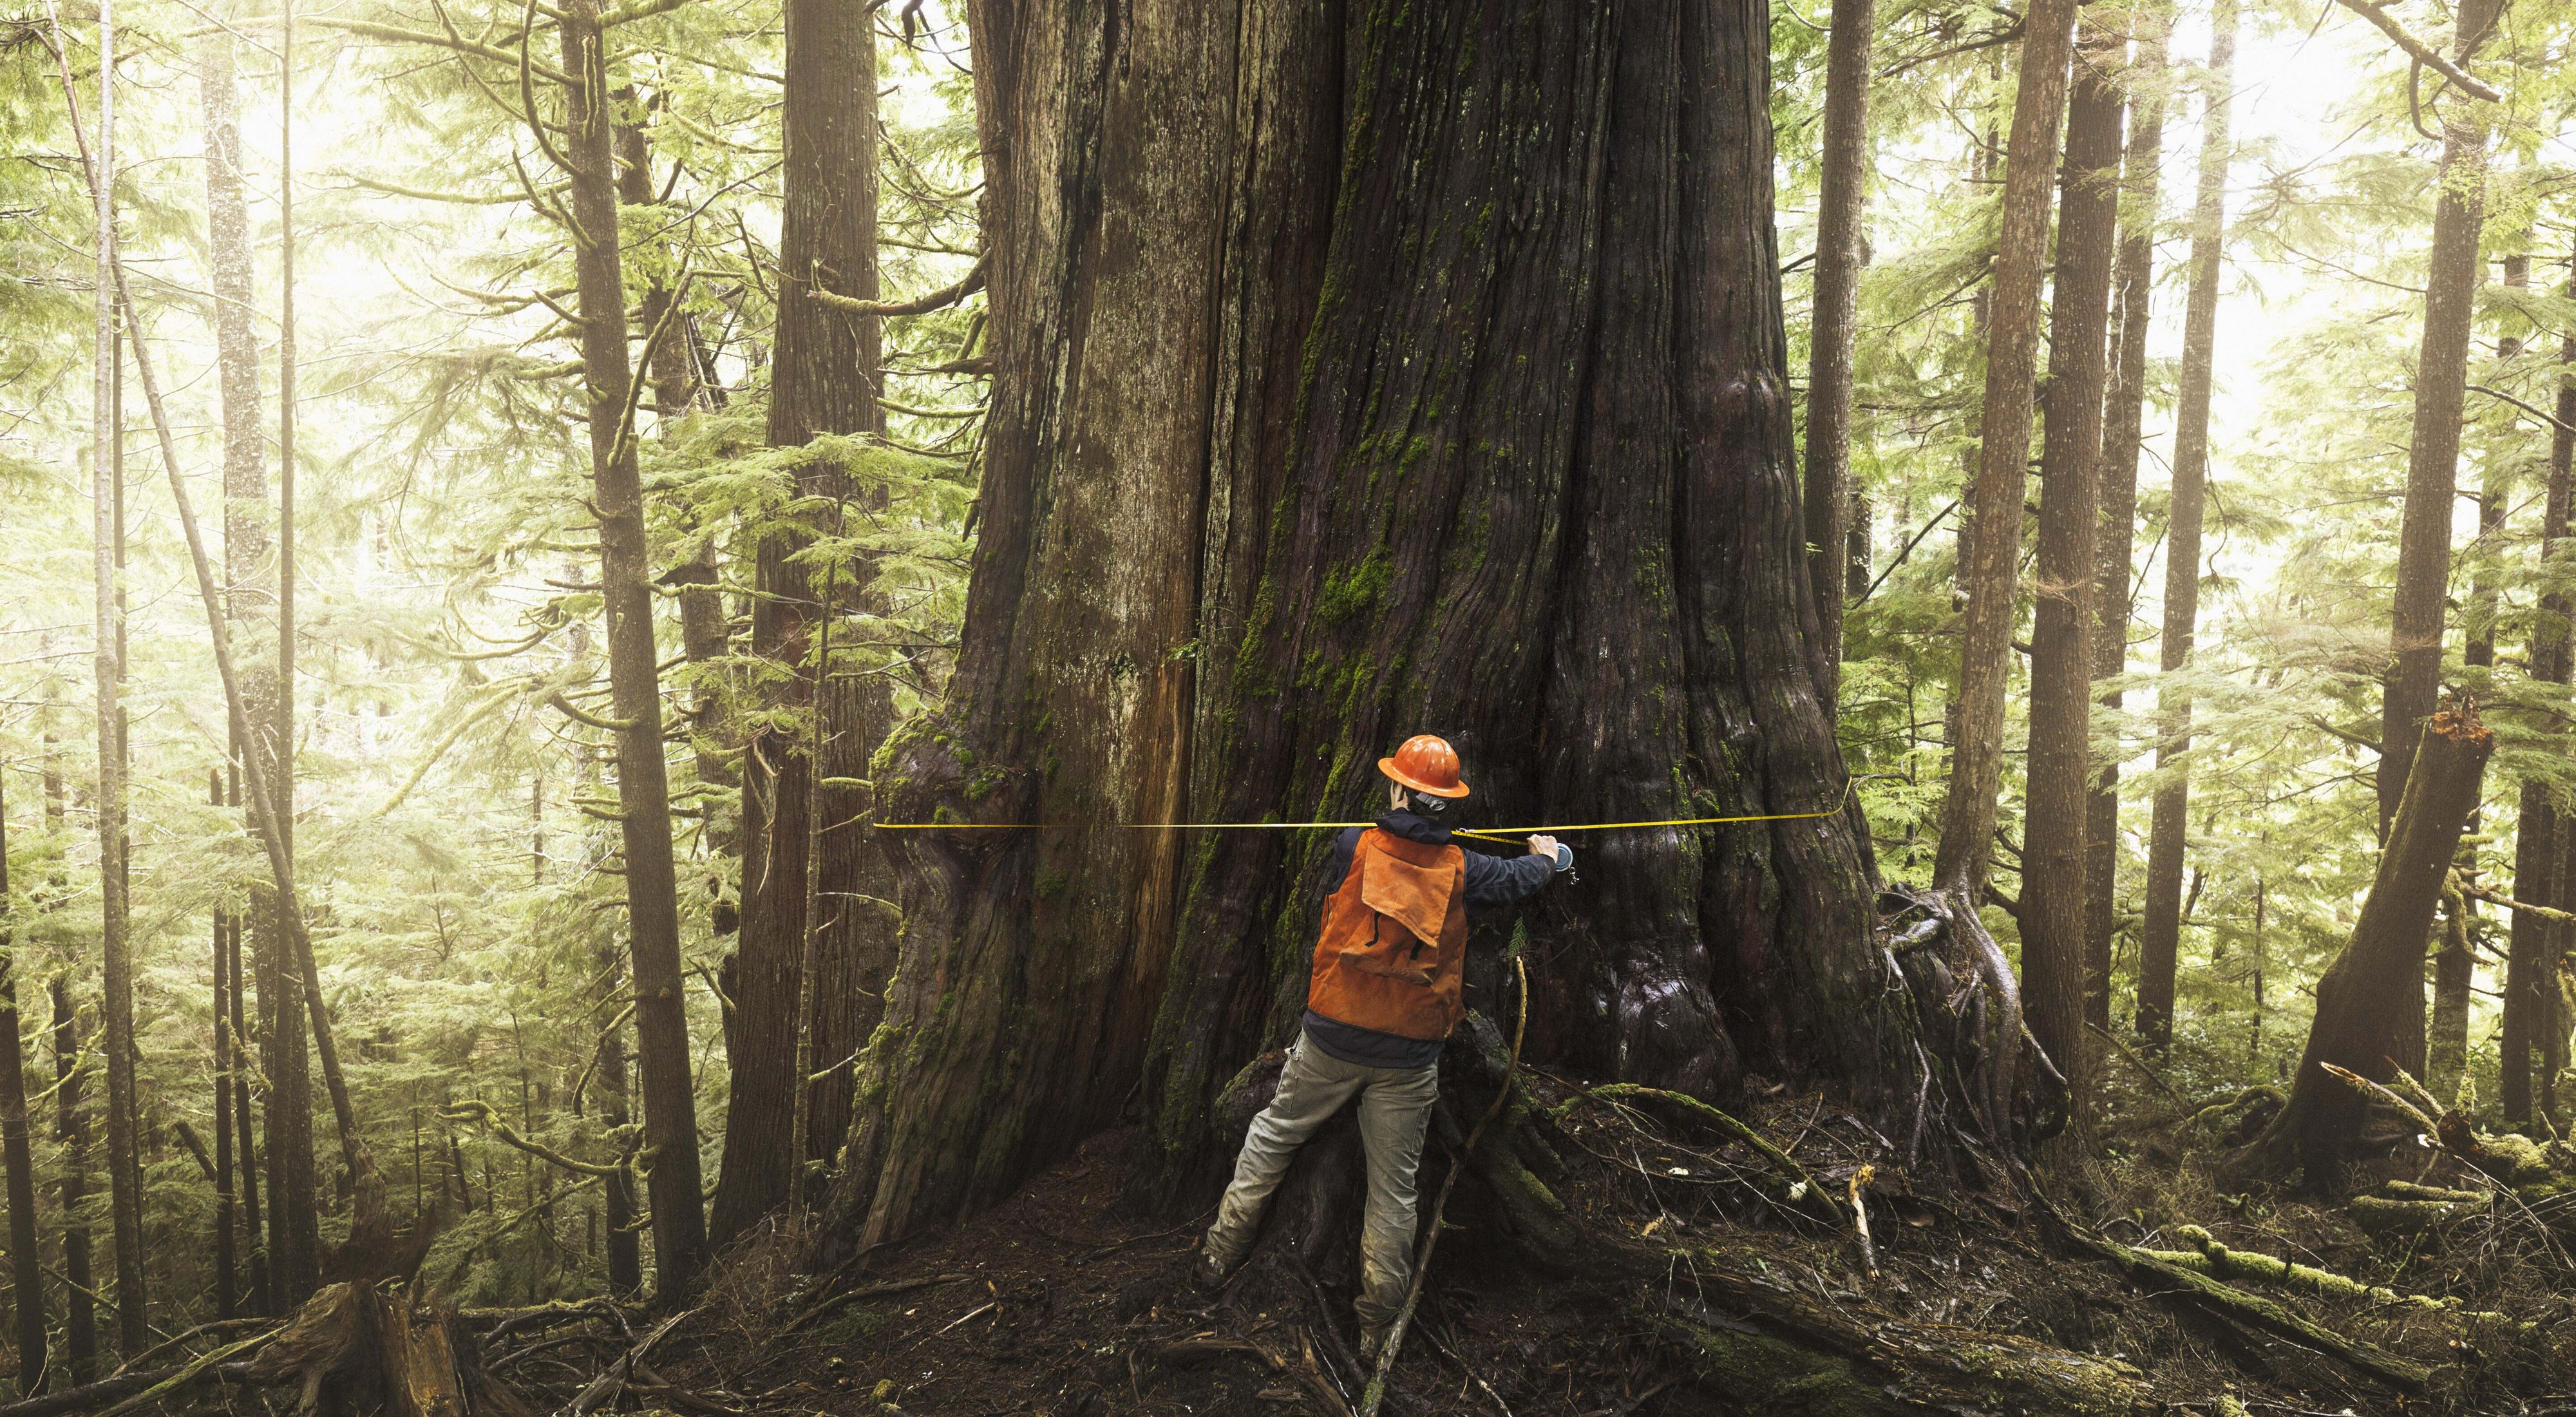 a person in an orange vest measures a massive tree.